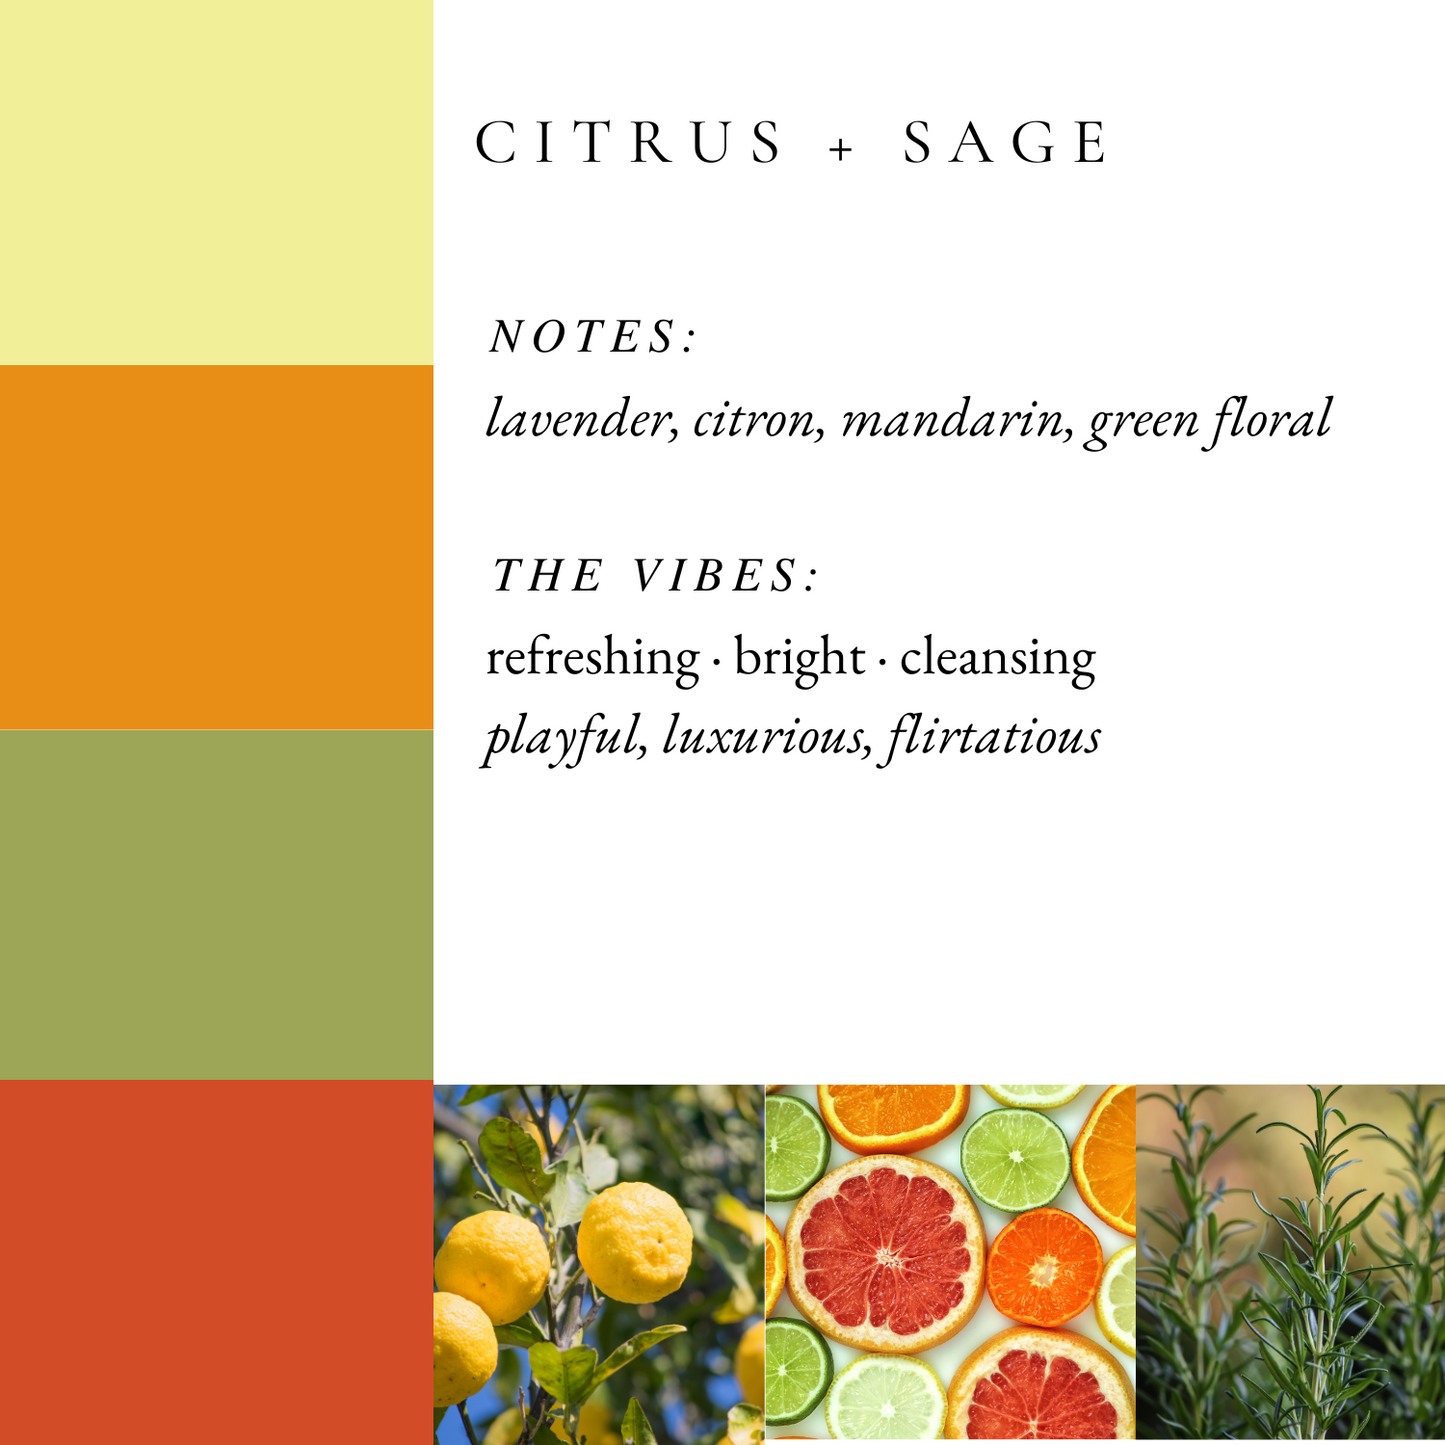 Citrus + Sage